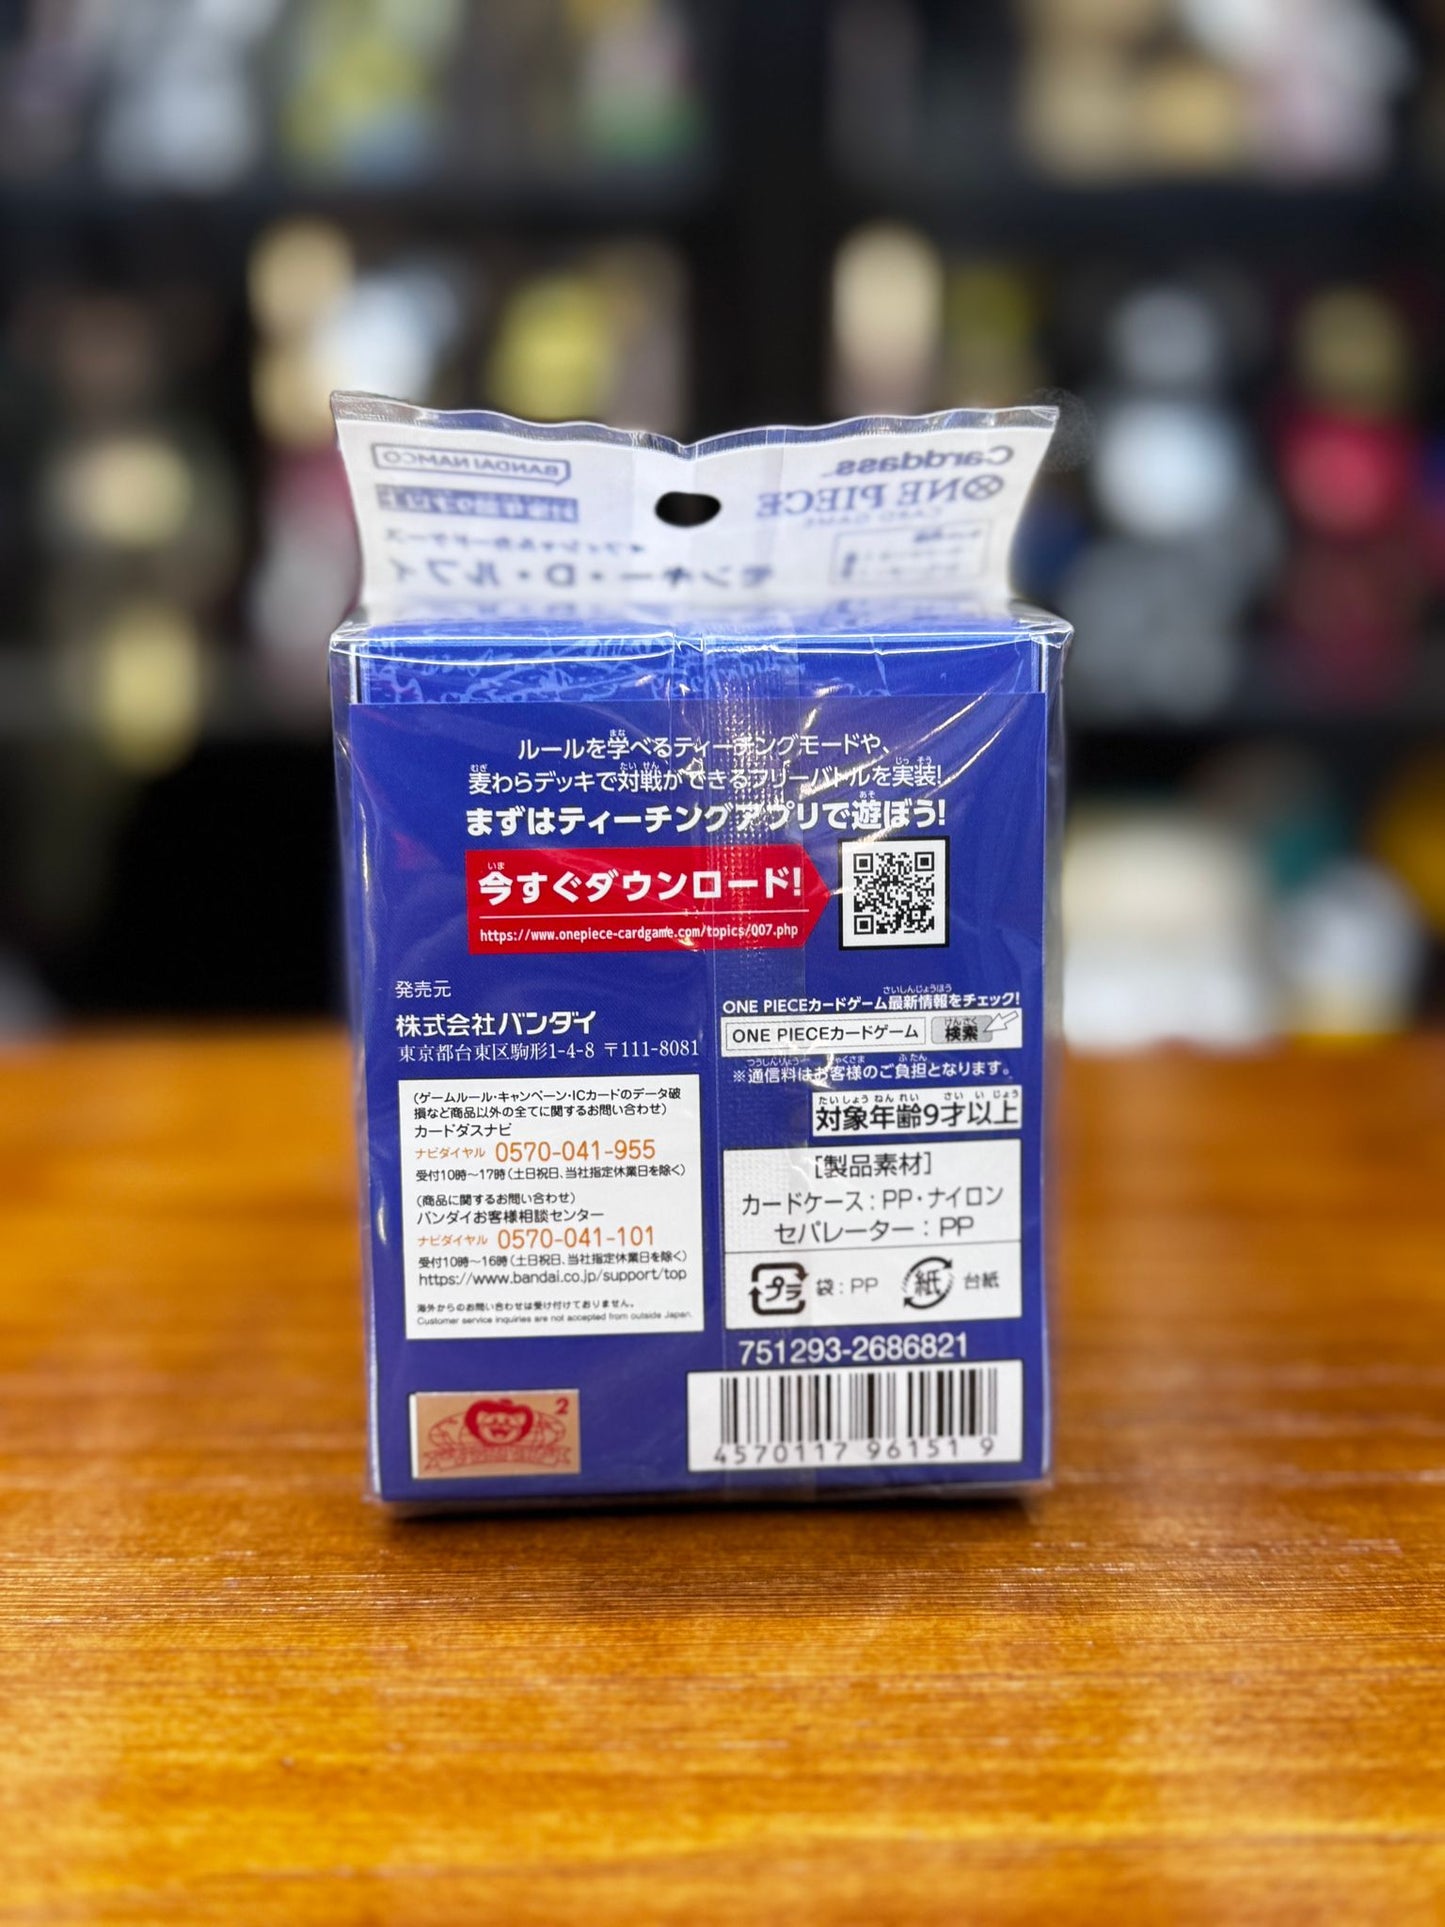 Bandai Carddass One Piece Card Game Card Box モンキー・D・ルフィ